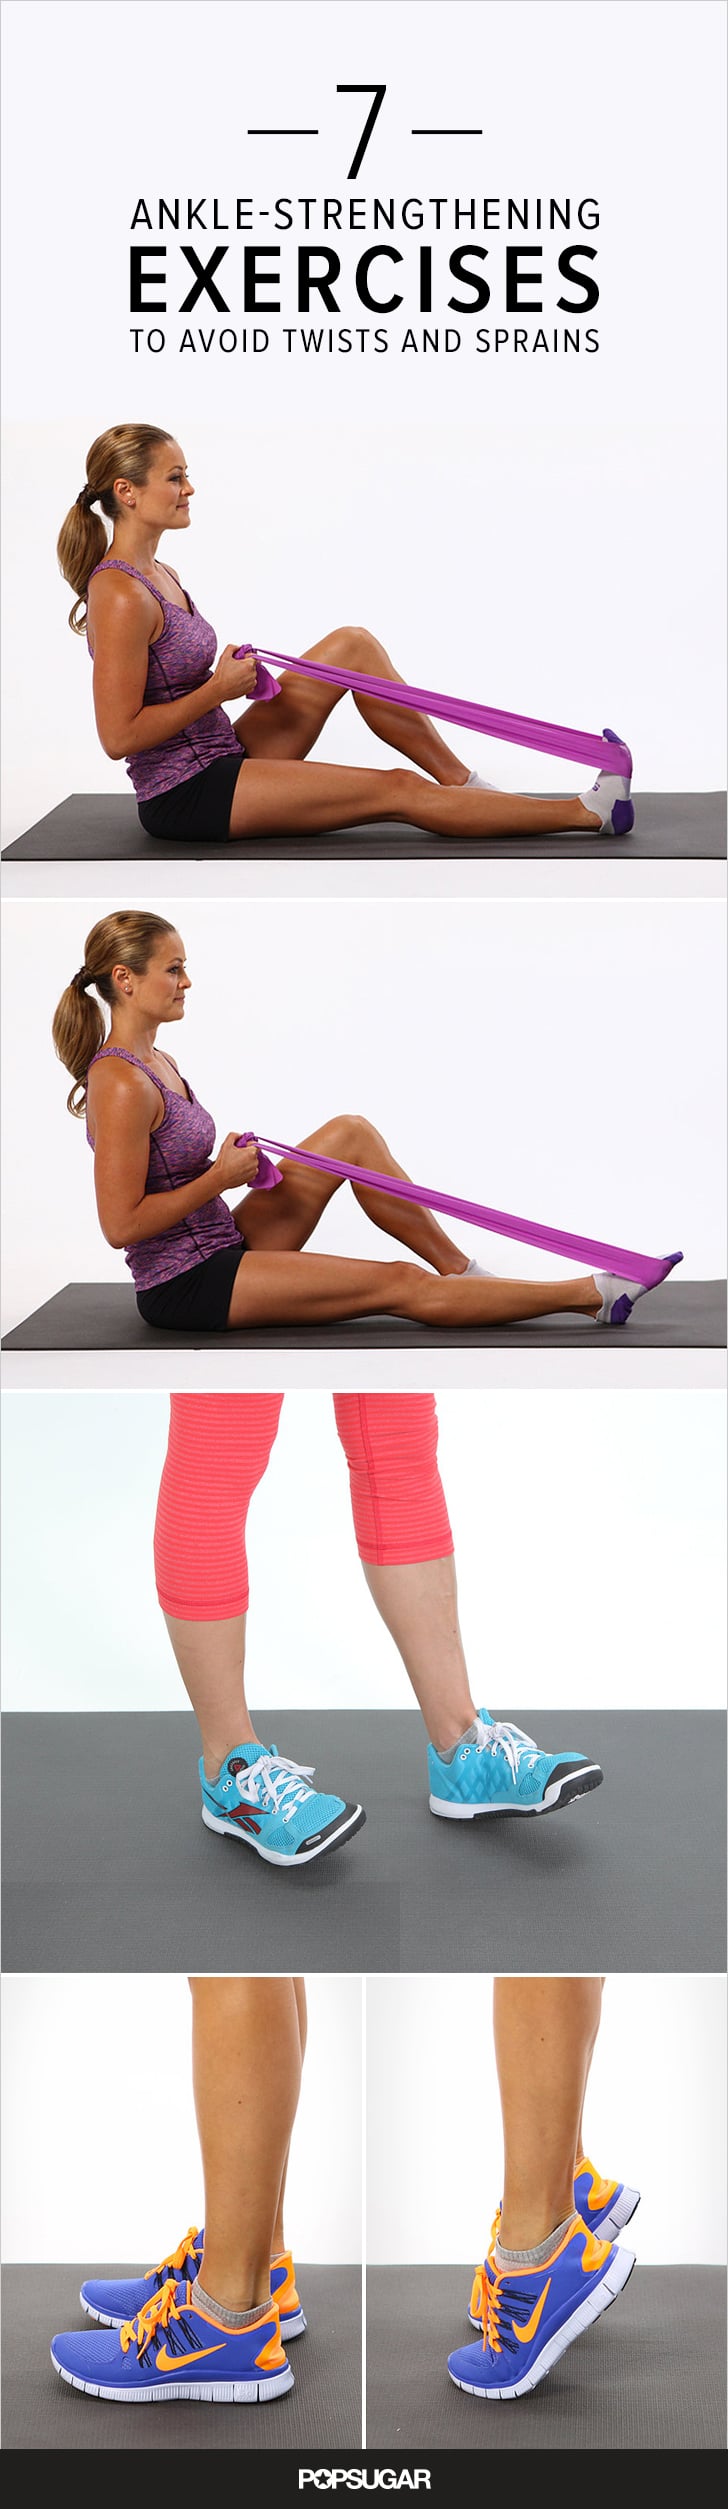 ankle flexibility exercises